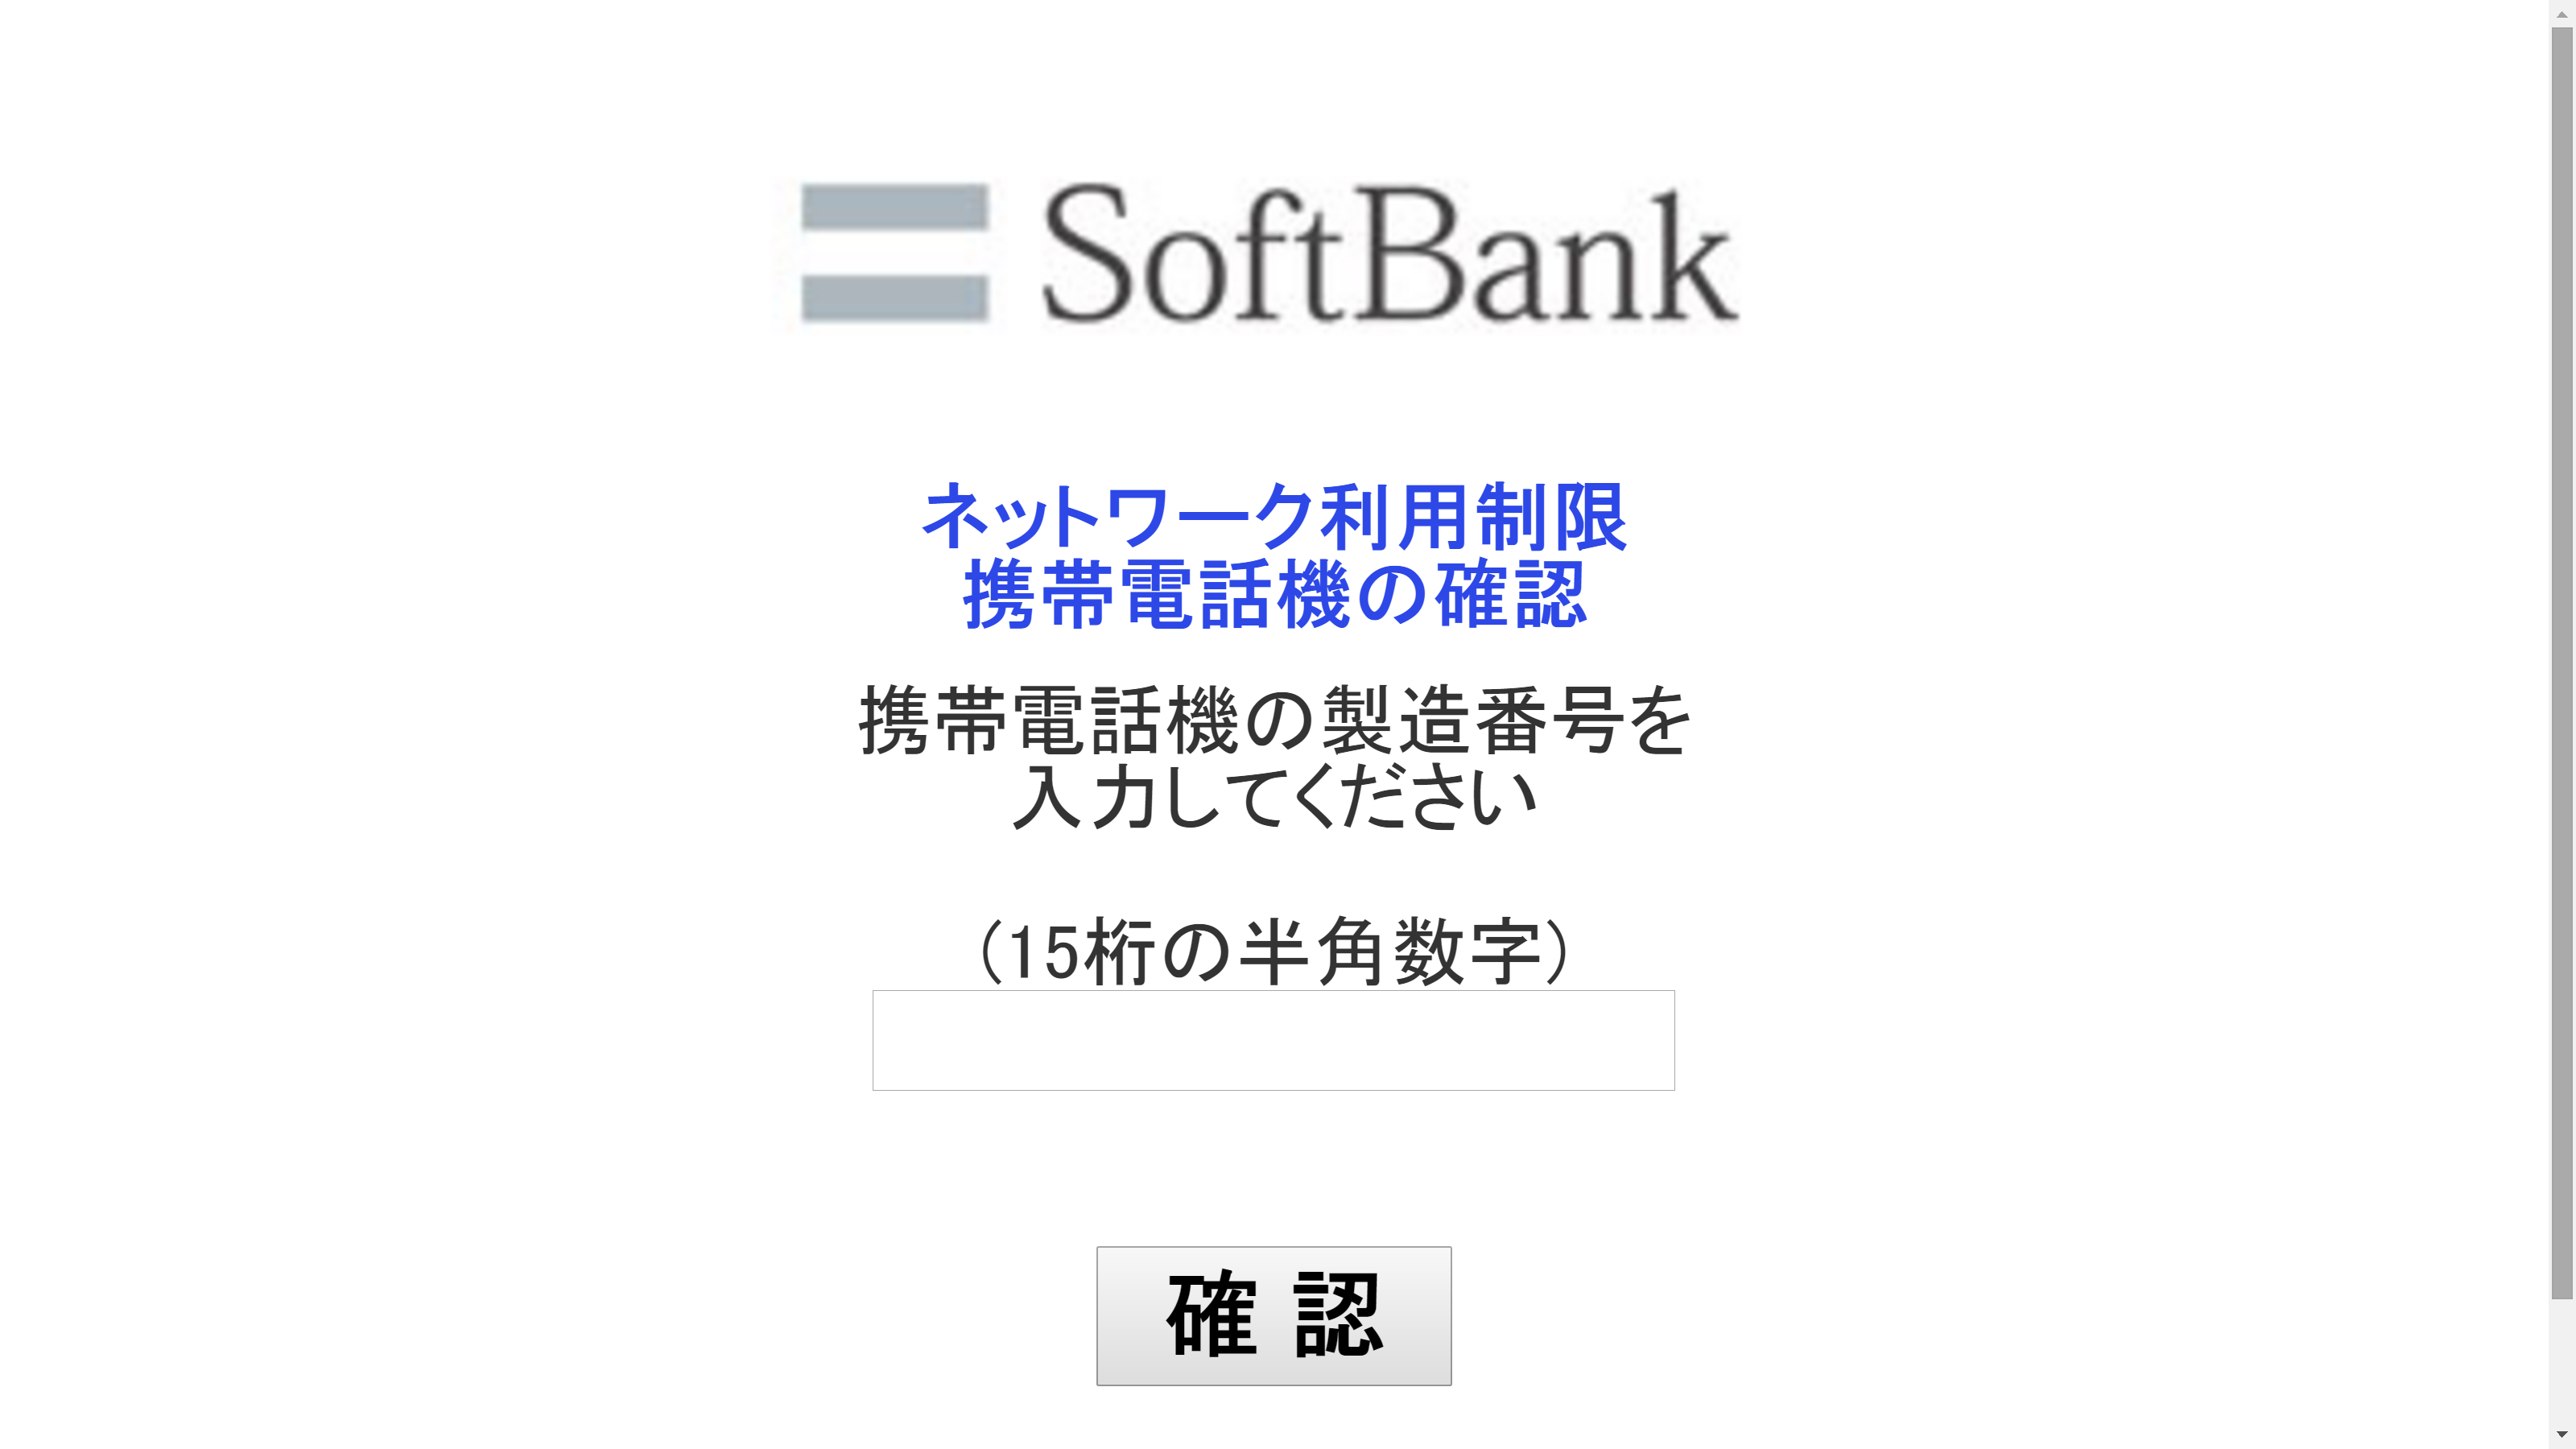 SoftBank IMEI verification